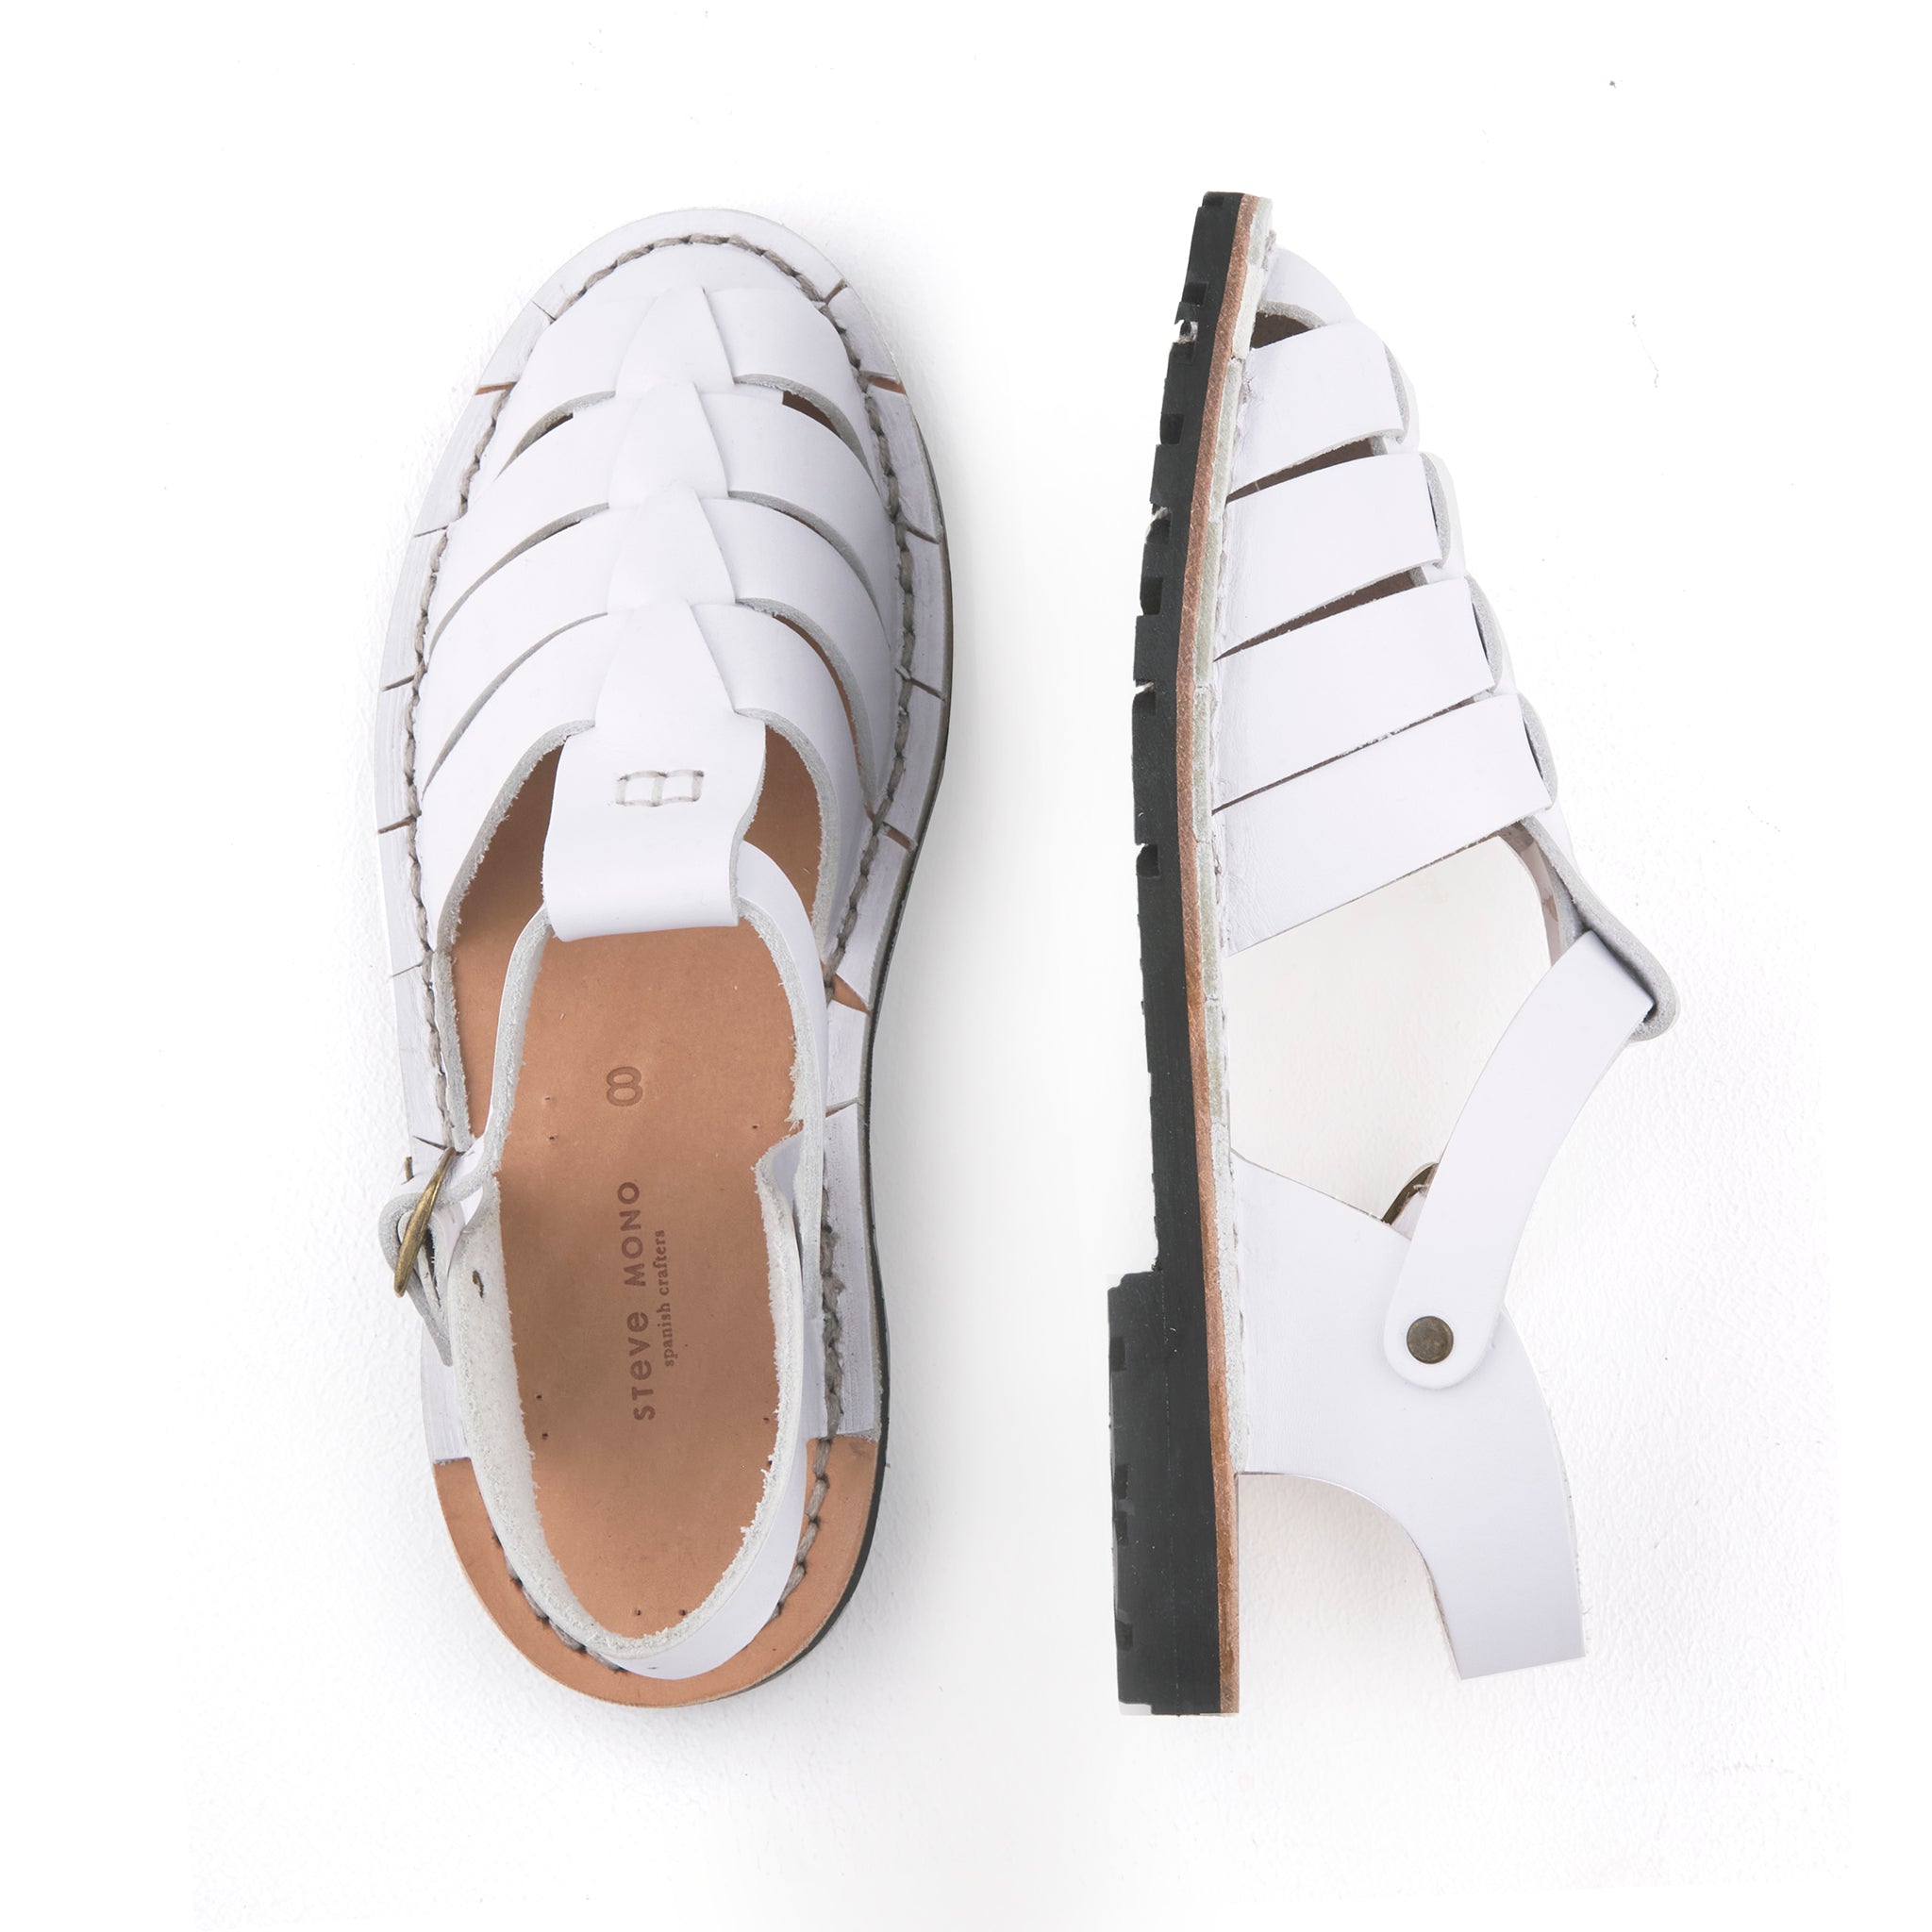 Steve Mono | Steve Mono - Artisanal Sandals 10/09 - White